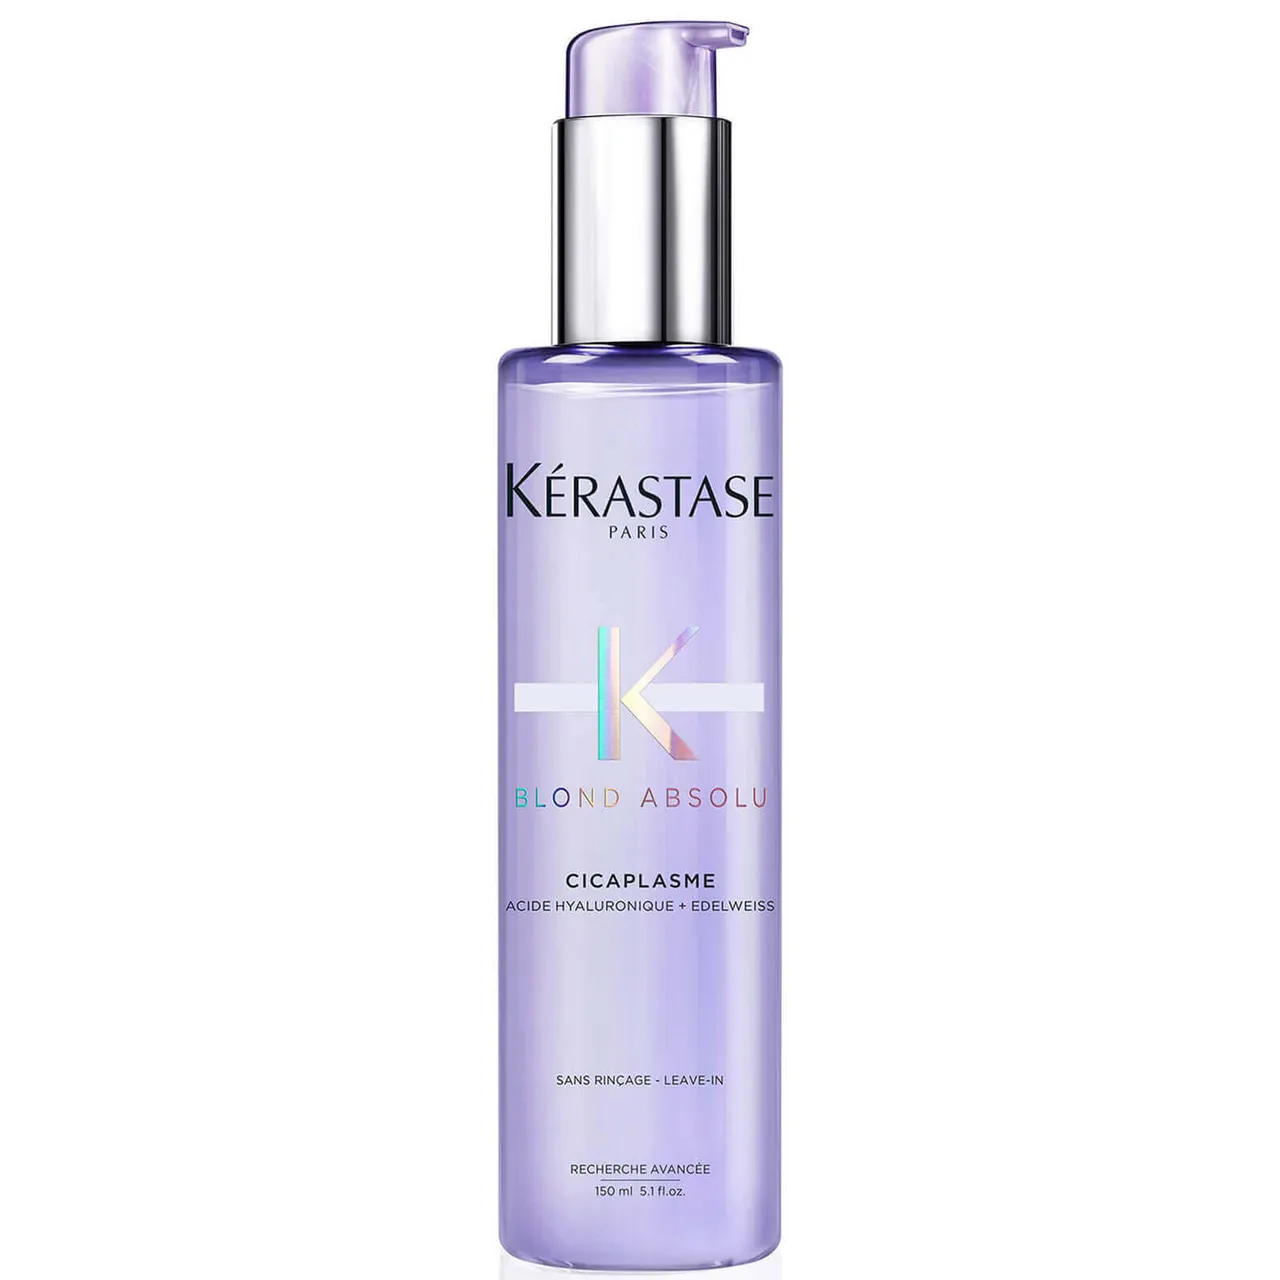 Kérastase Blond Absolu Ultraviolet Shampoo, Conditioner and Treatment Routine for Brightening Blonde Hair